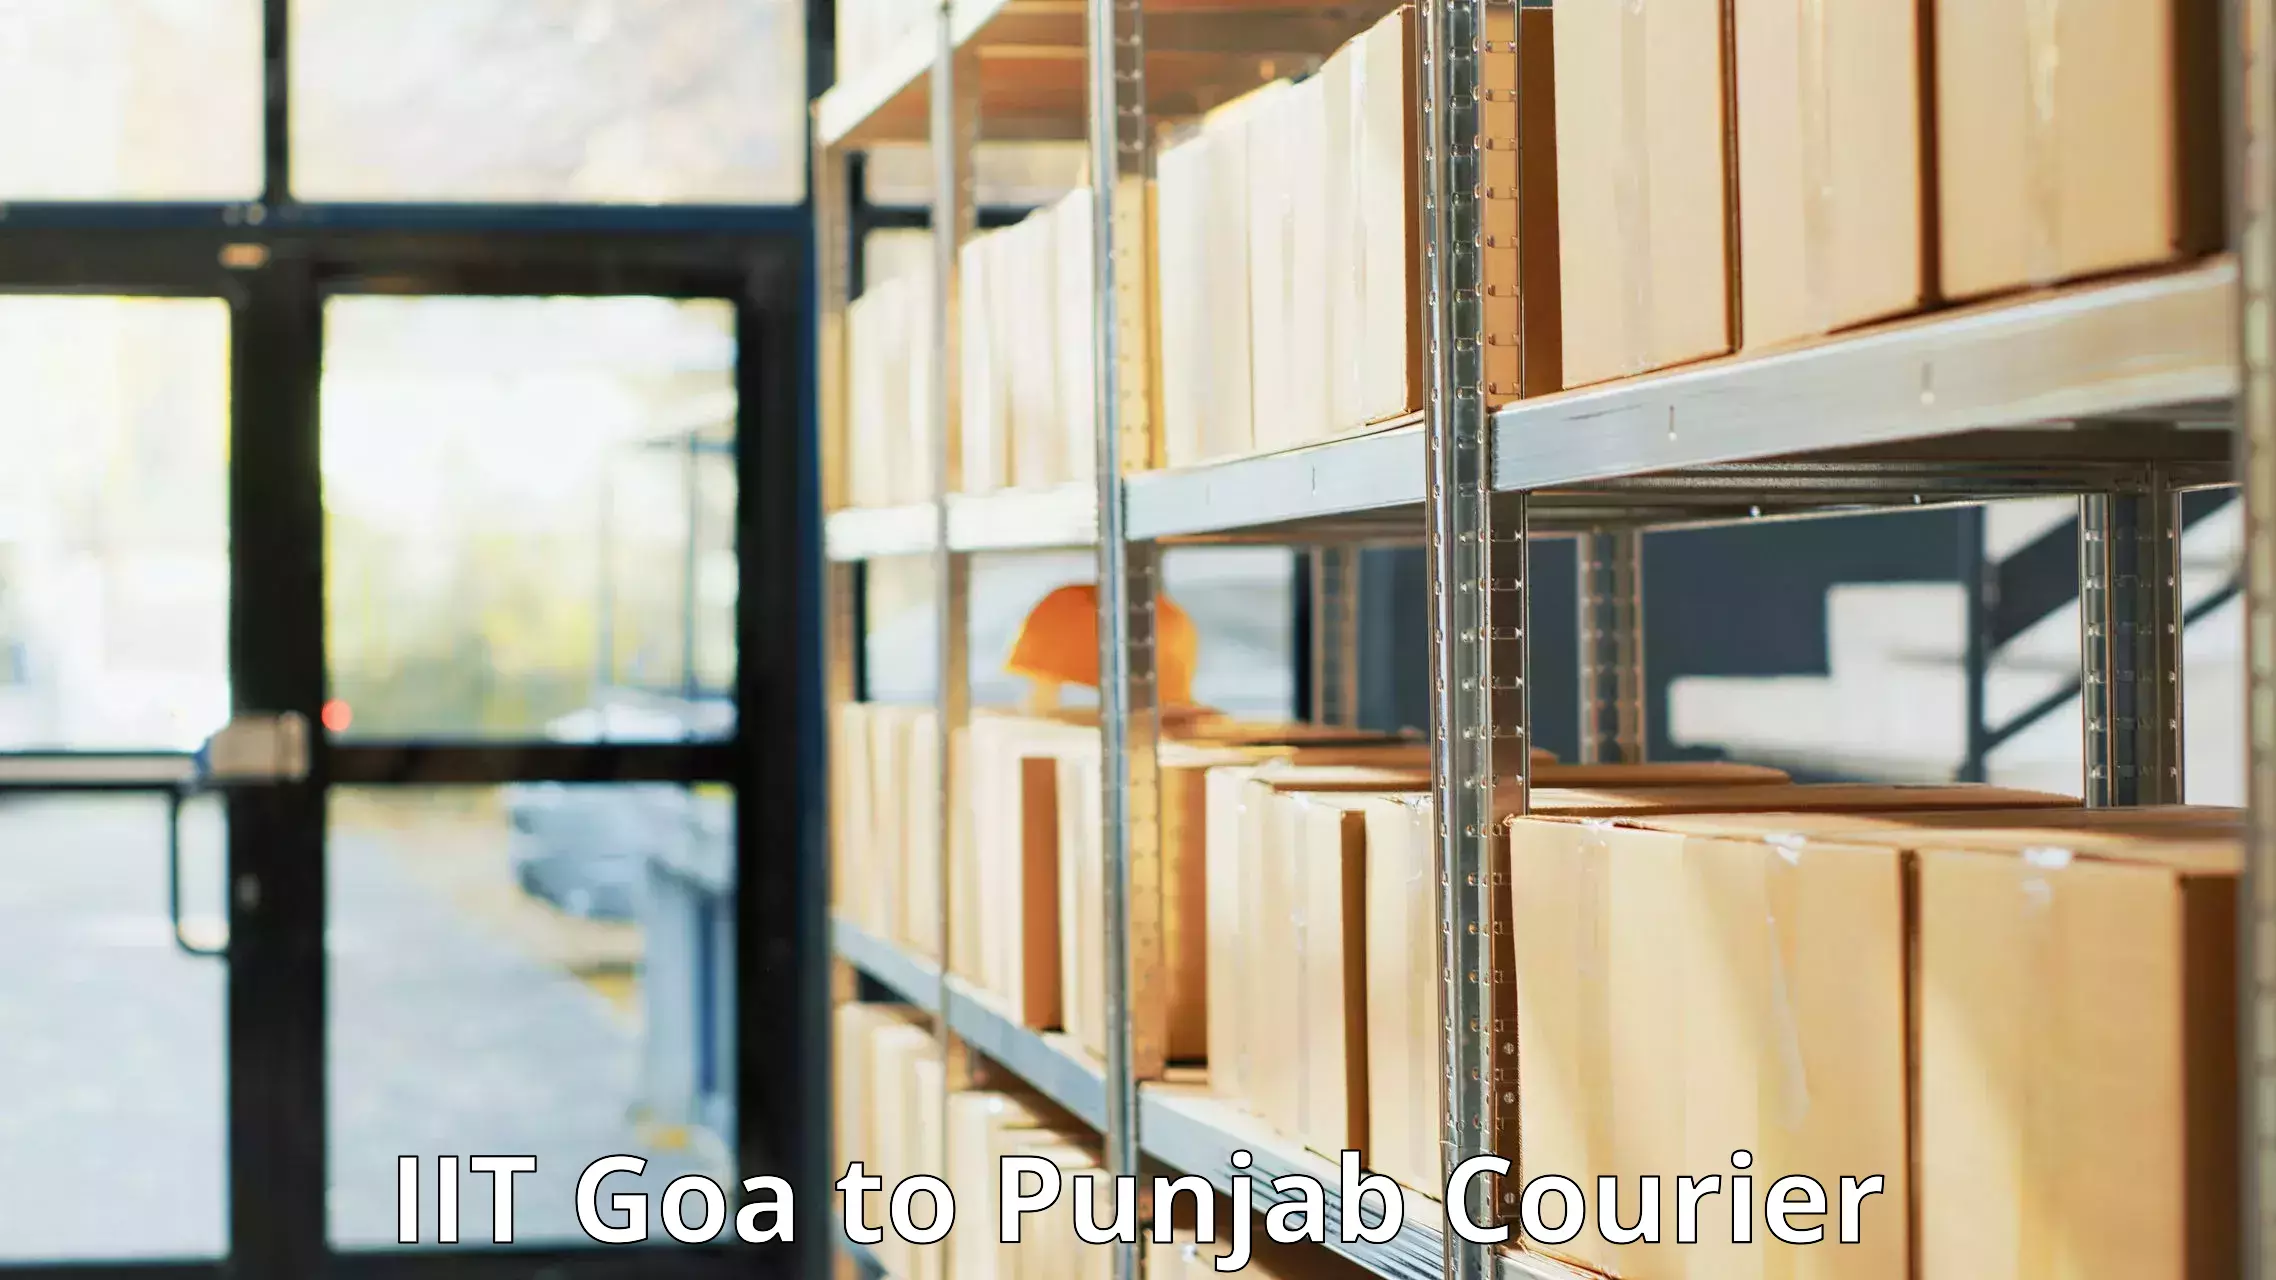 Digital courier platforms IIT Goa to Pathankot